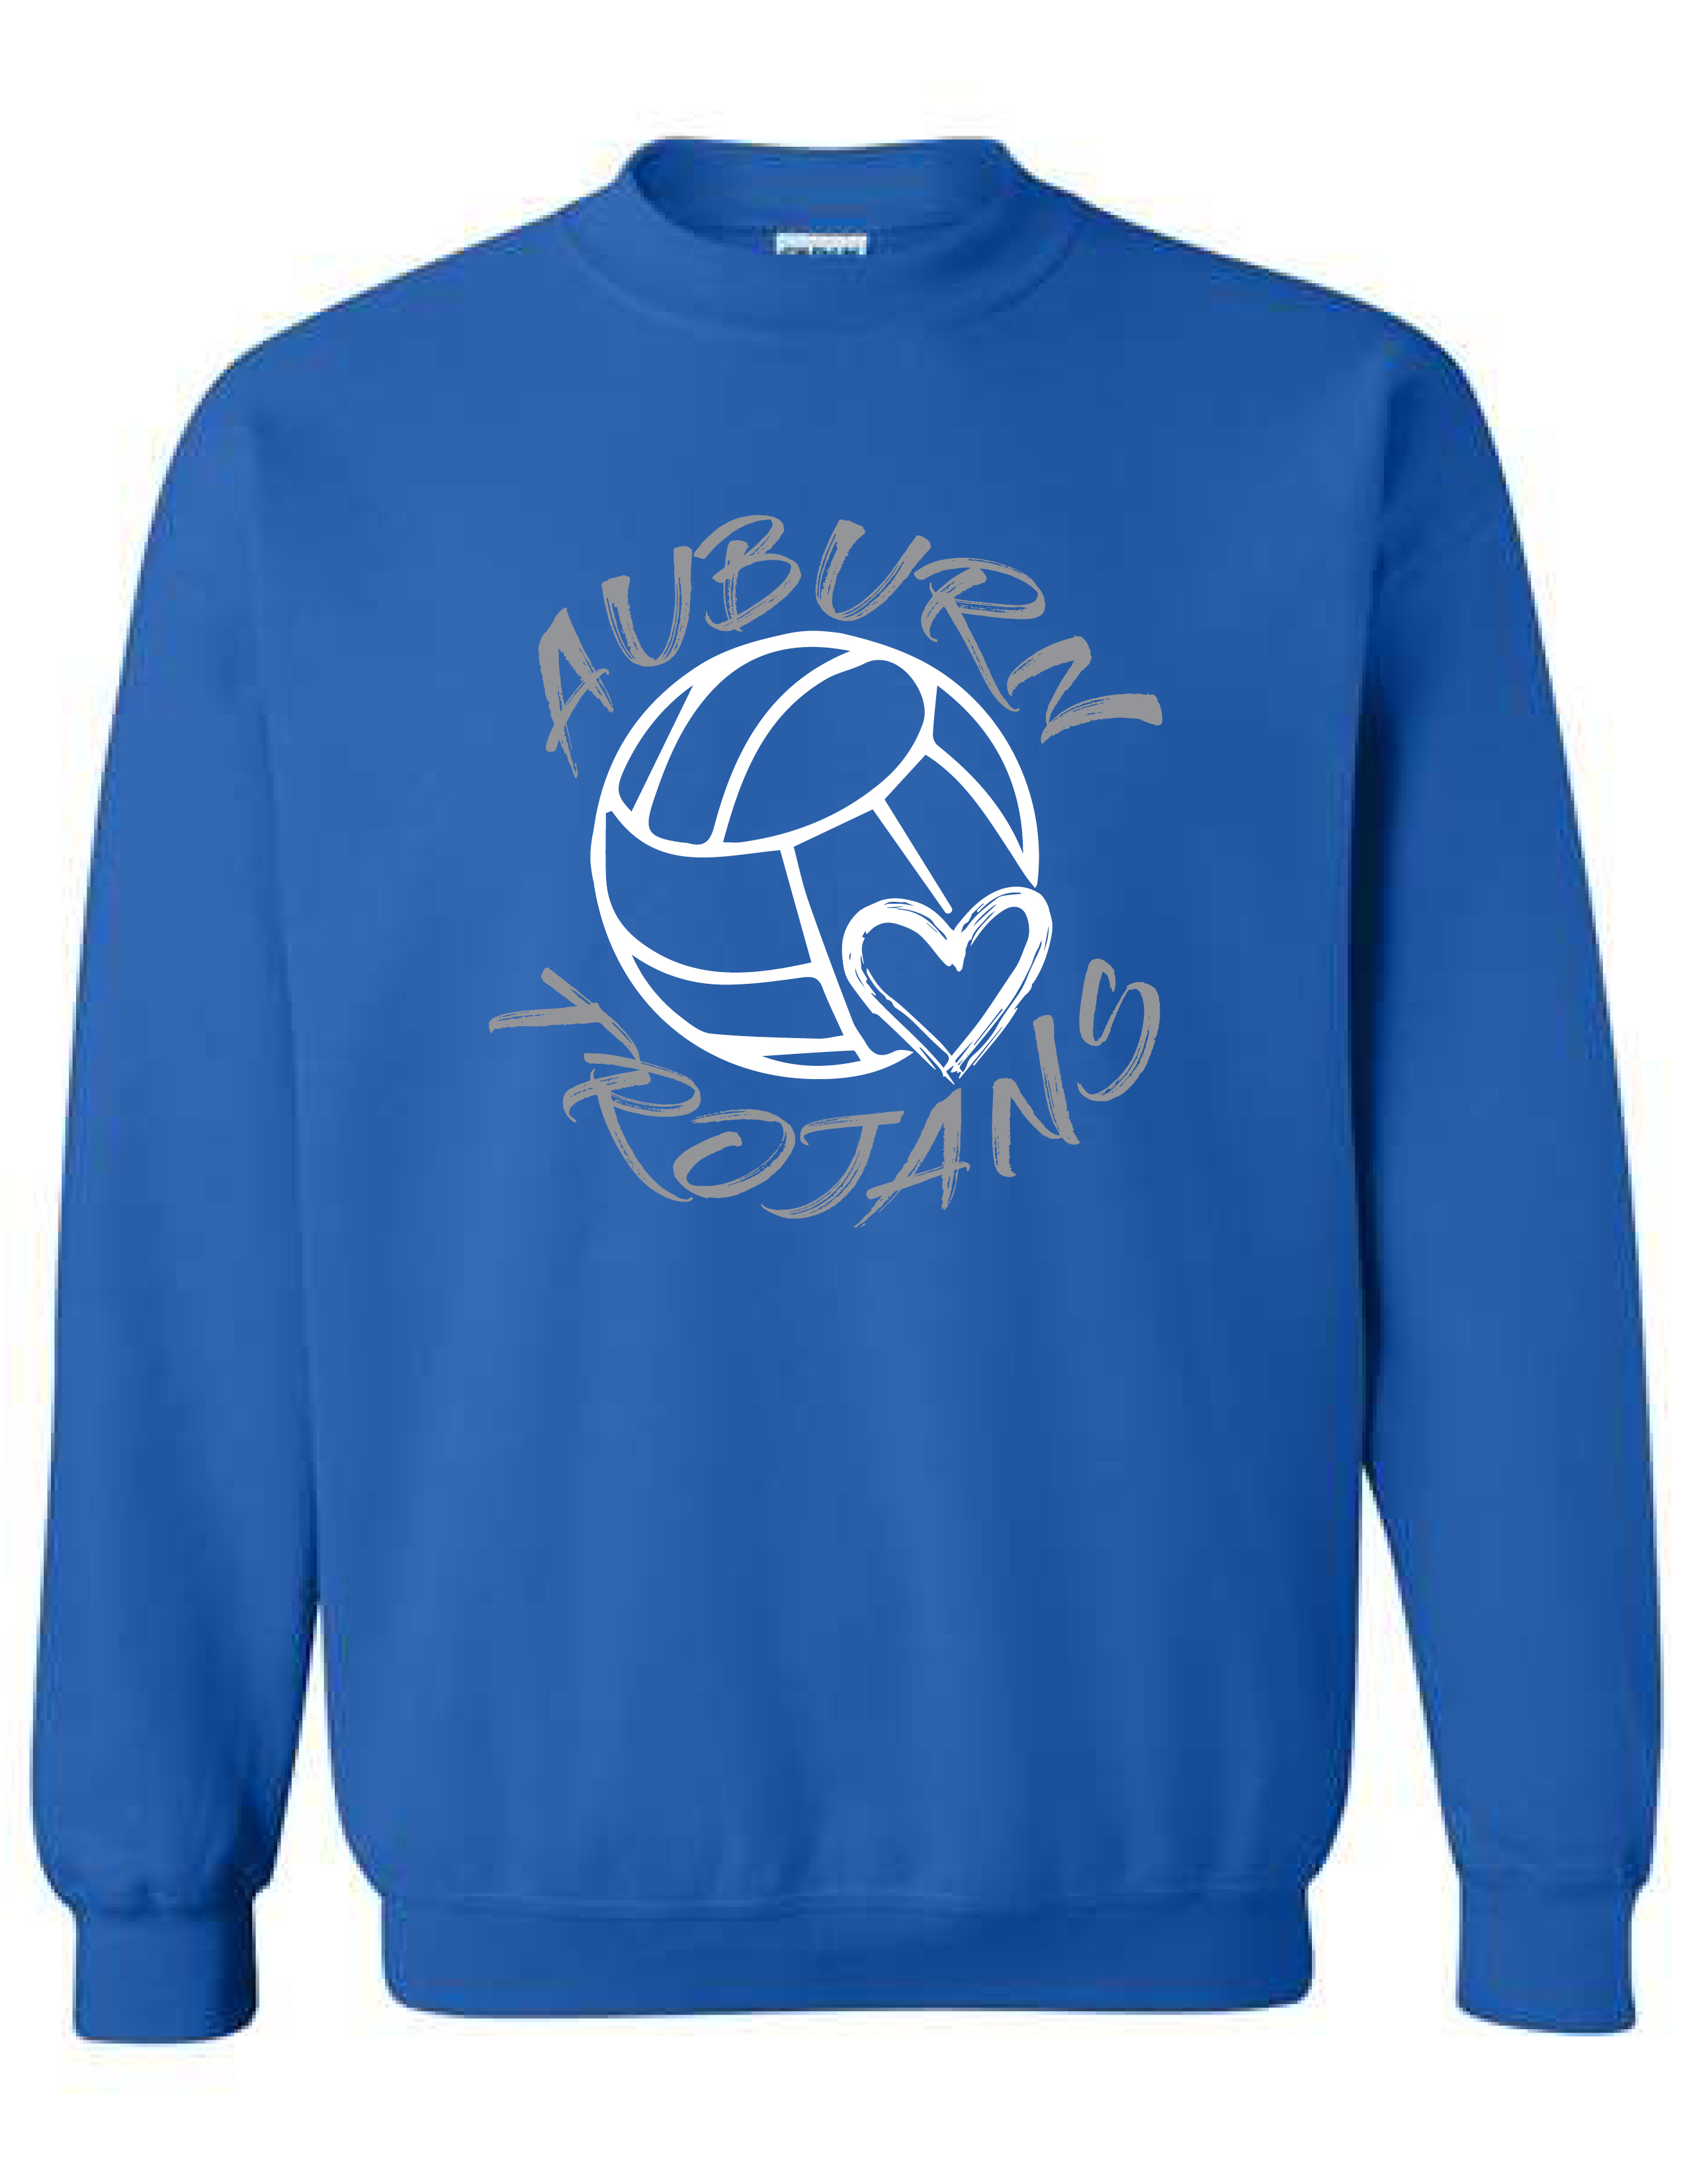 Auburn  Volleyball CREWNECK SWEATSHIRT